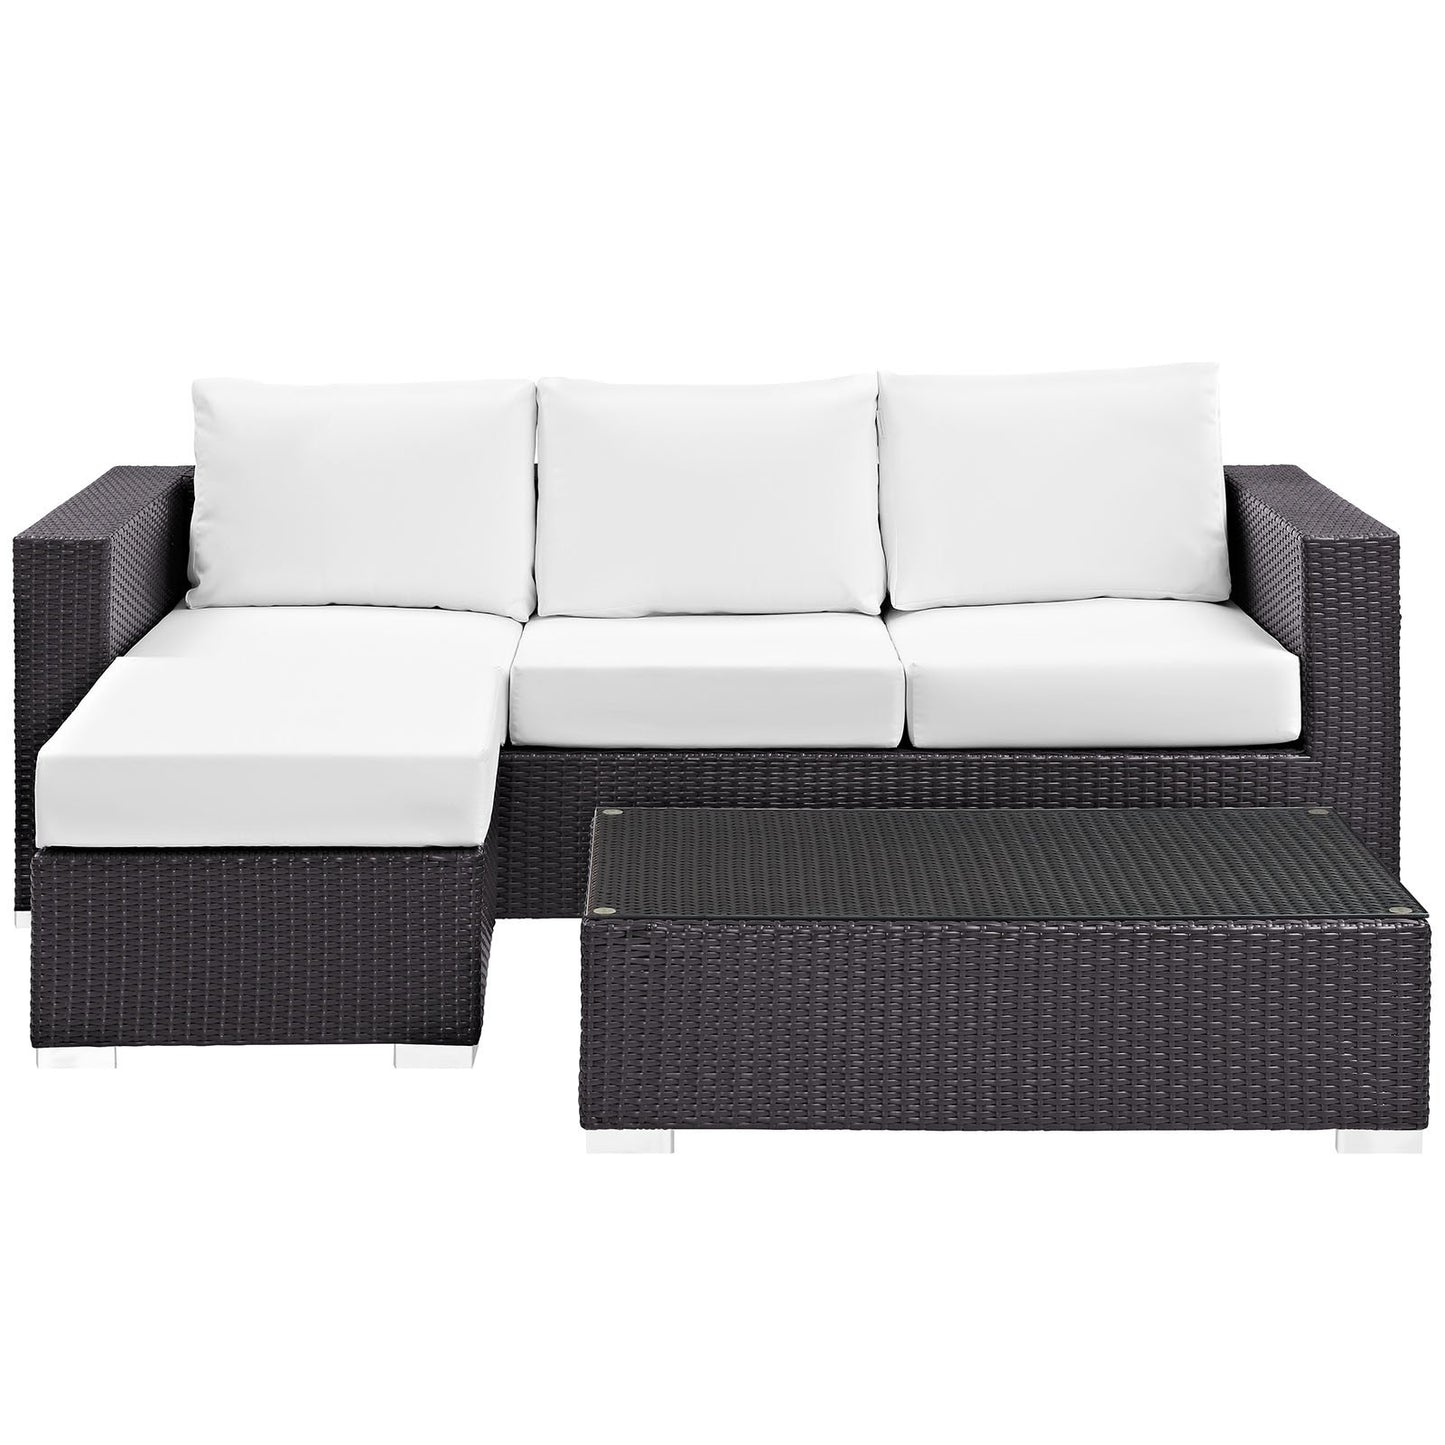 Modway Convene 3-Piece Outdoor Wicker Sofa Set, Espresso/White